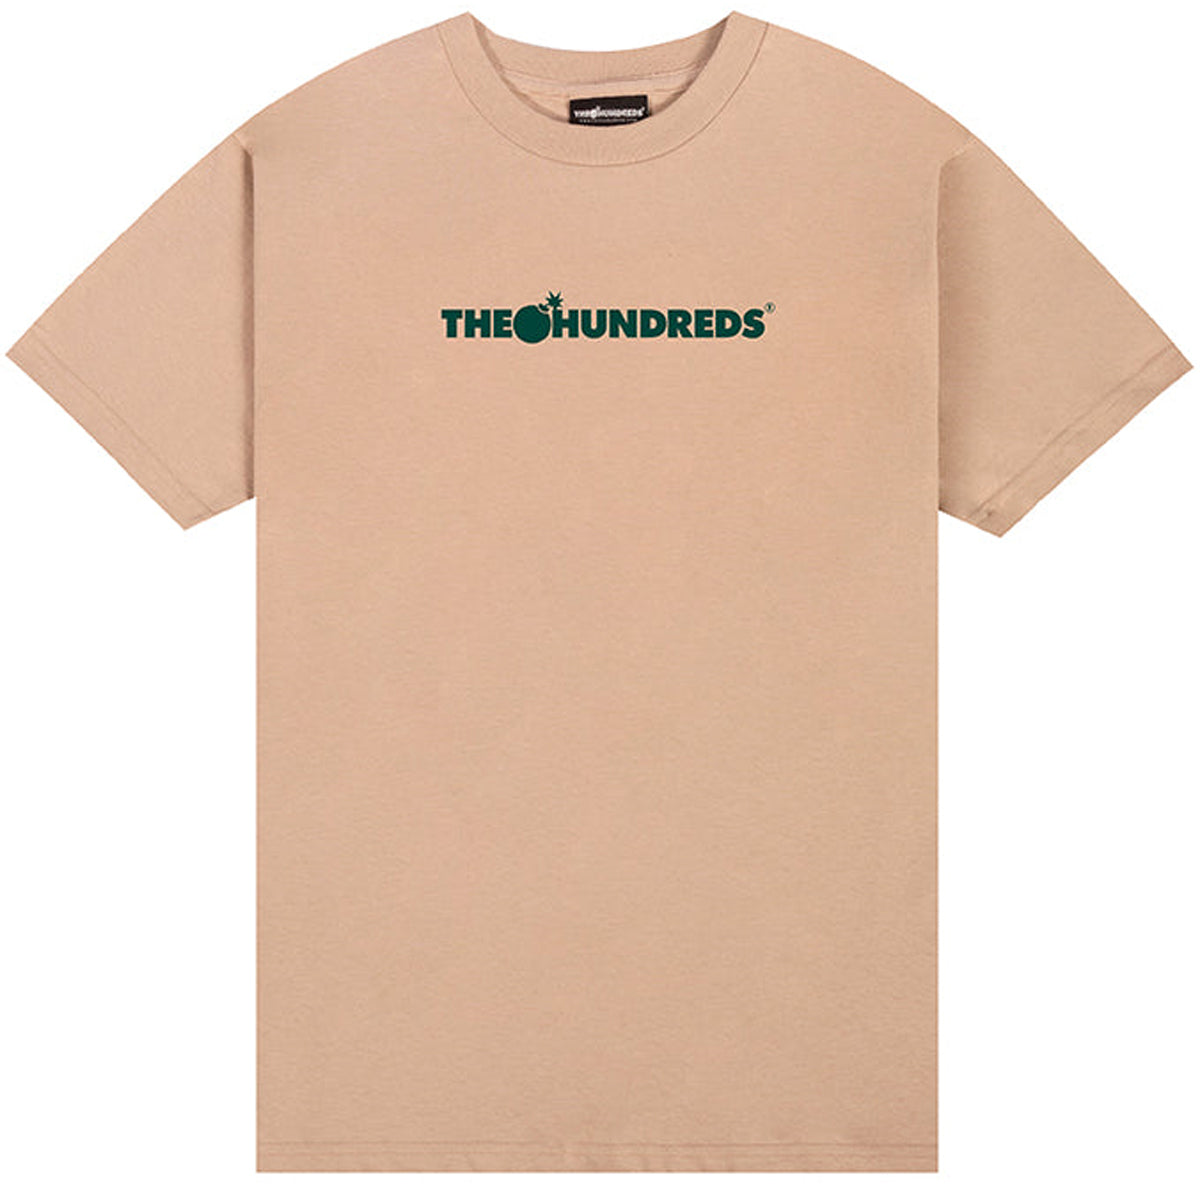 The Hundreds Bar Logo T-Shirt - Sand image 1